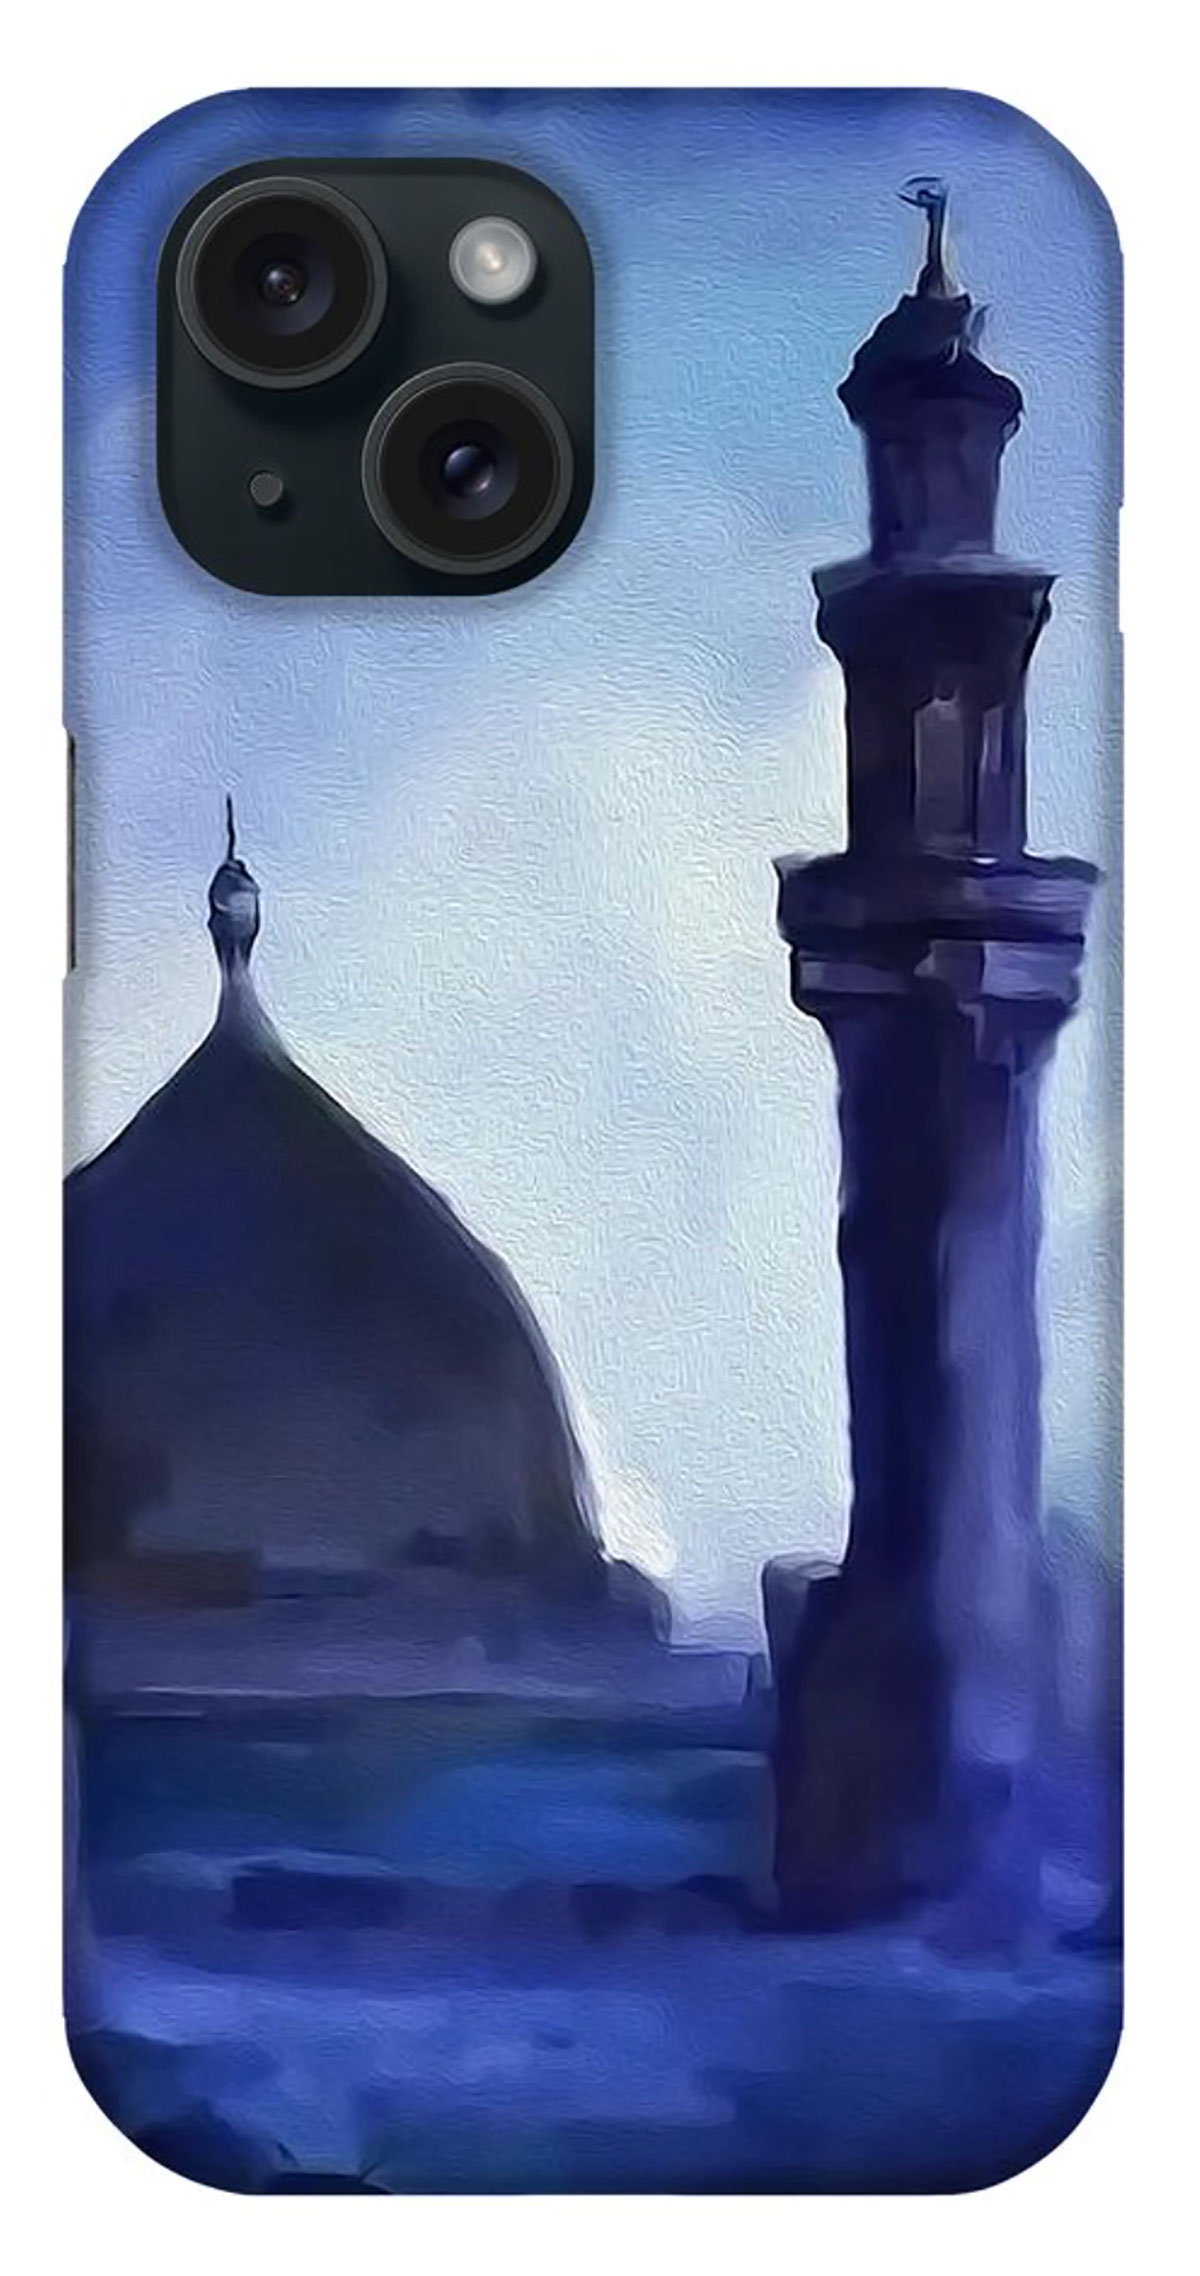 Moroccan Mosque 8 rendition image